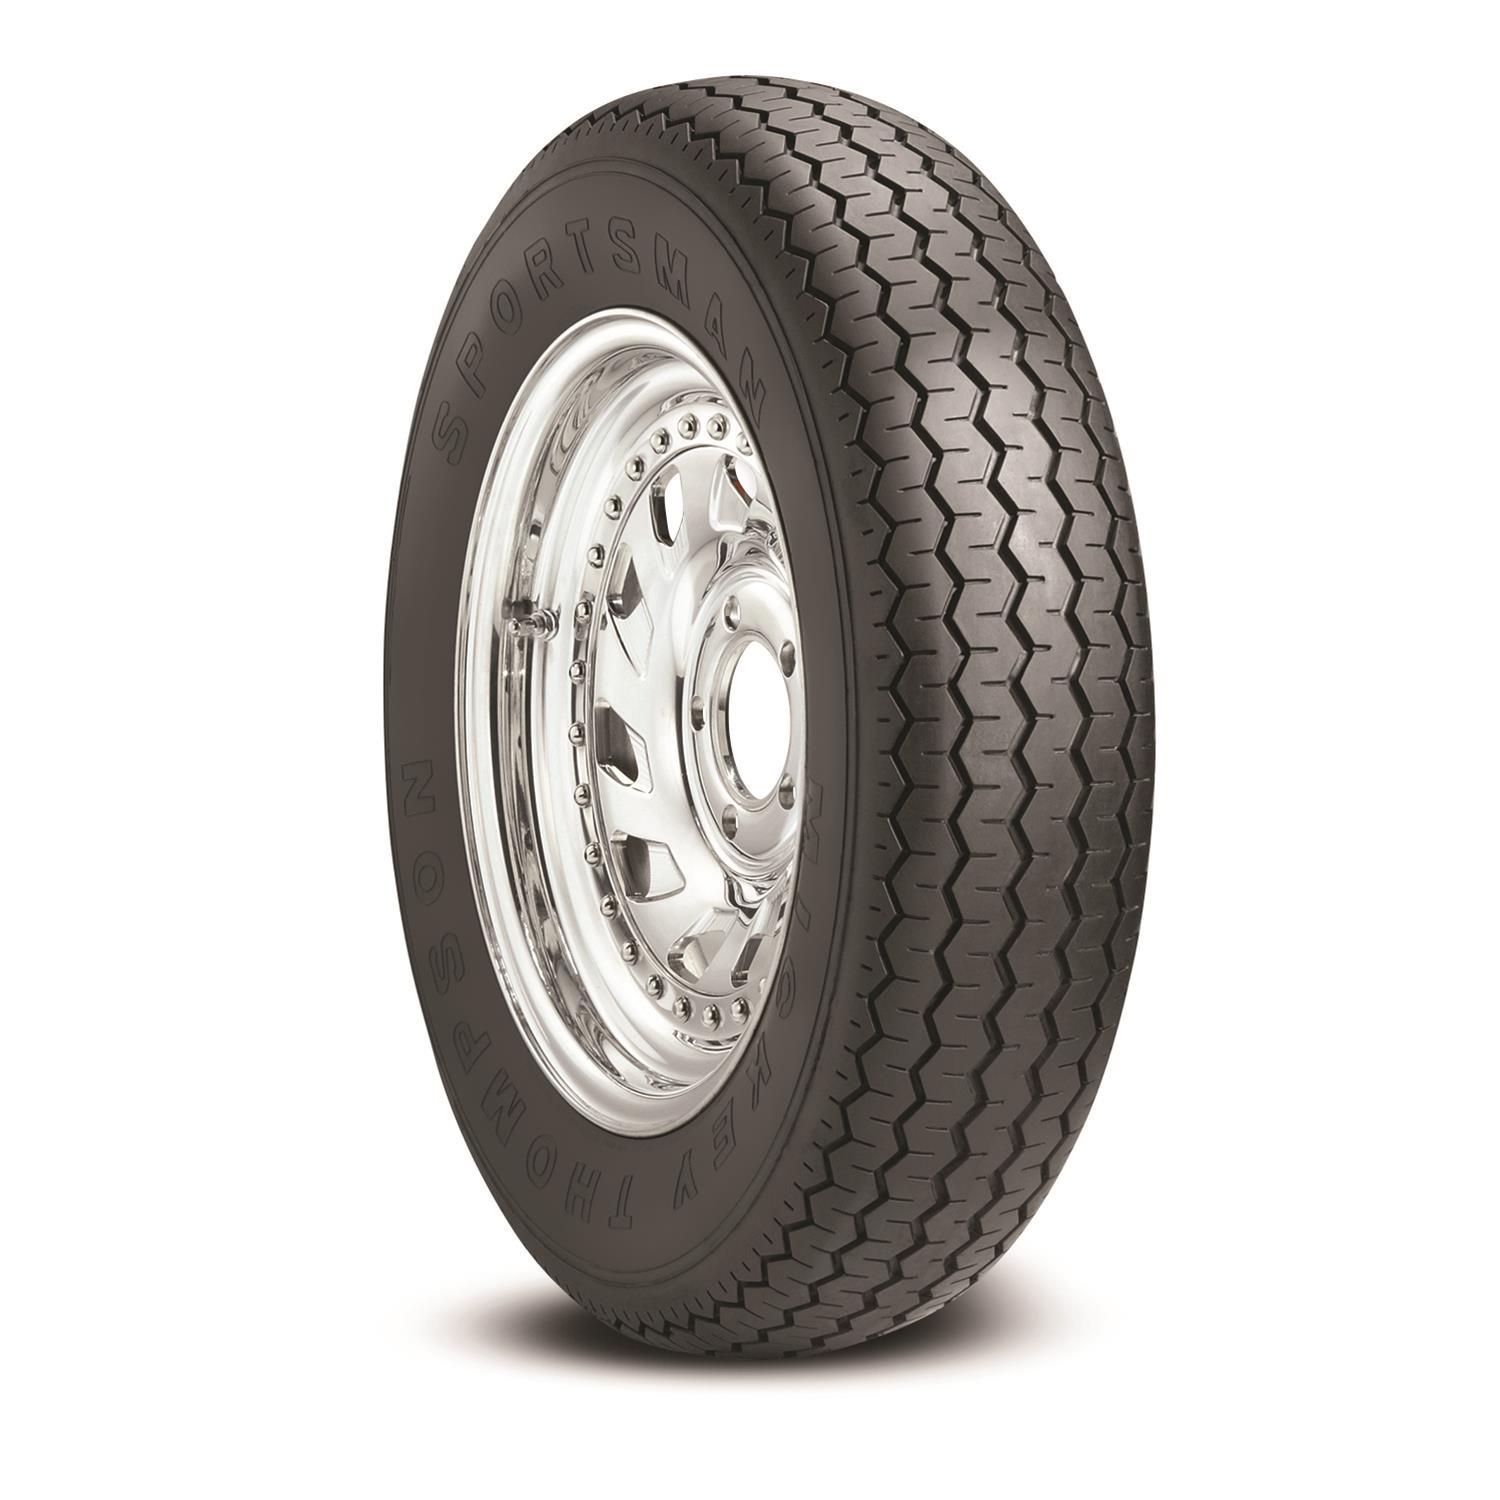 26x7.50-15LT Sportsman Front Tire - 255667